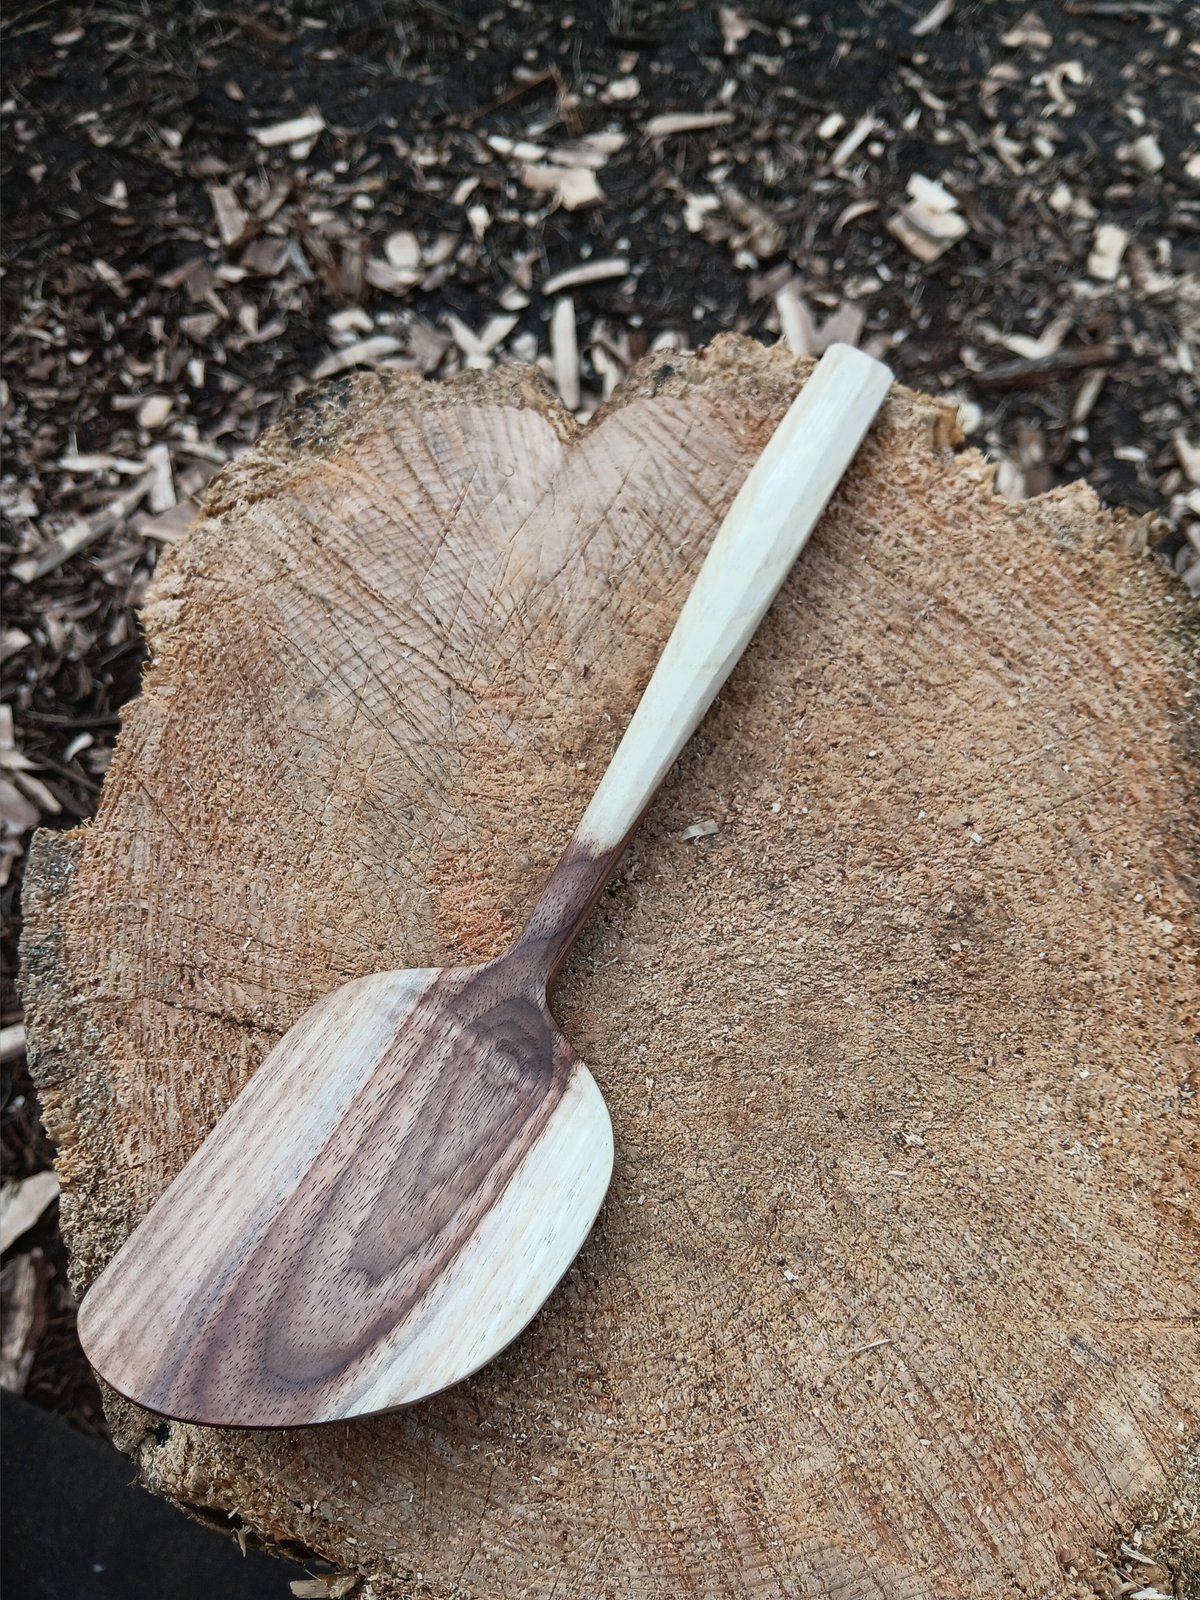 Image of Baker's spatula